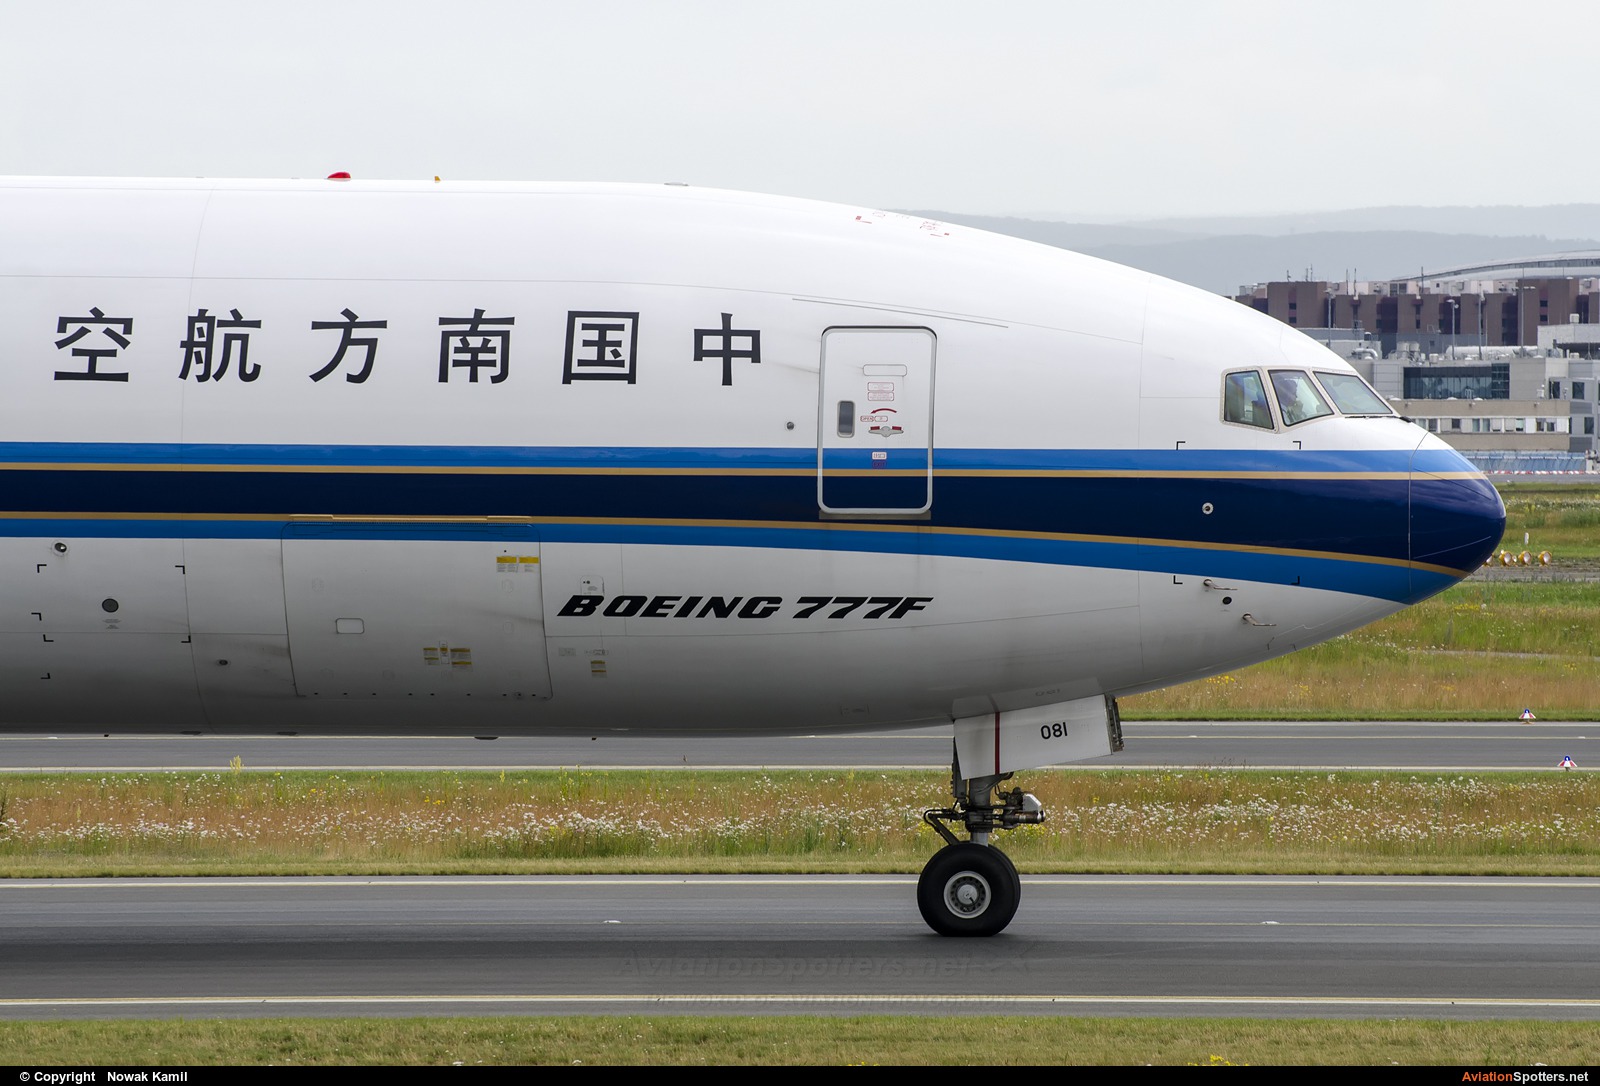 China Southern Airlines Cargo  -  777-F1B  (B-2081) By Nowak Kamil (kretek)